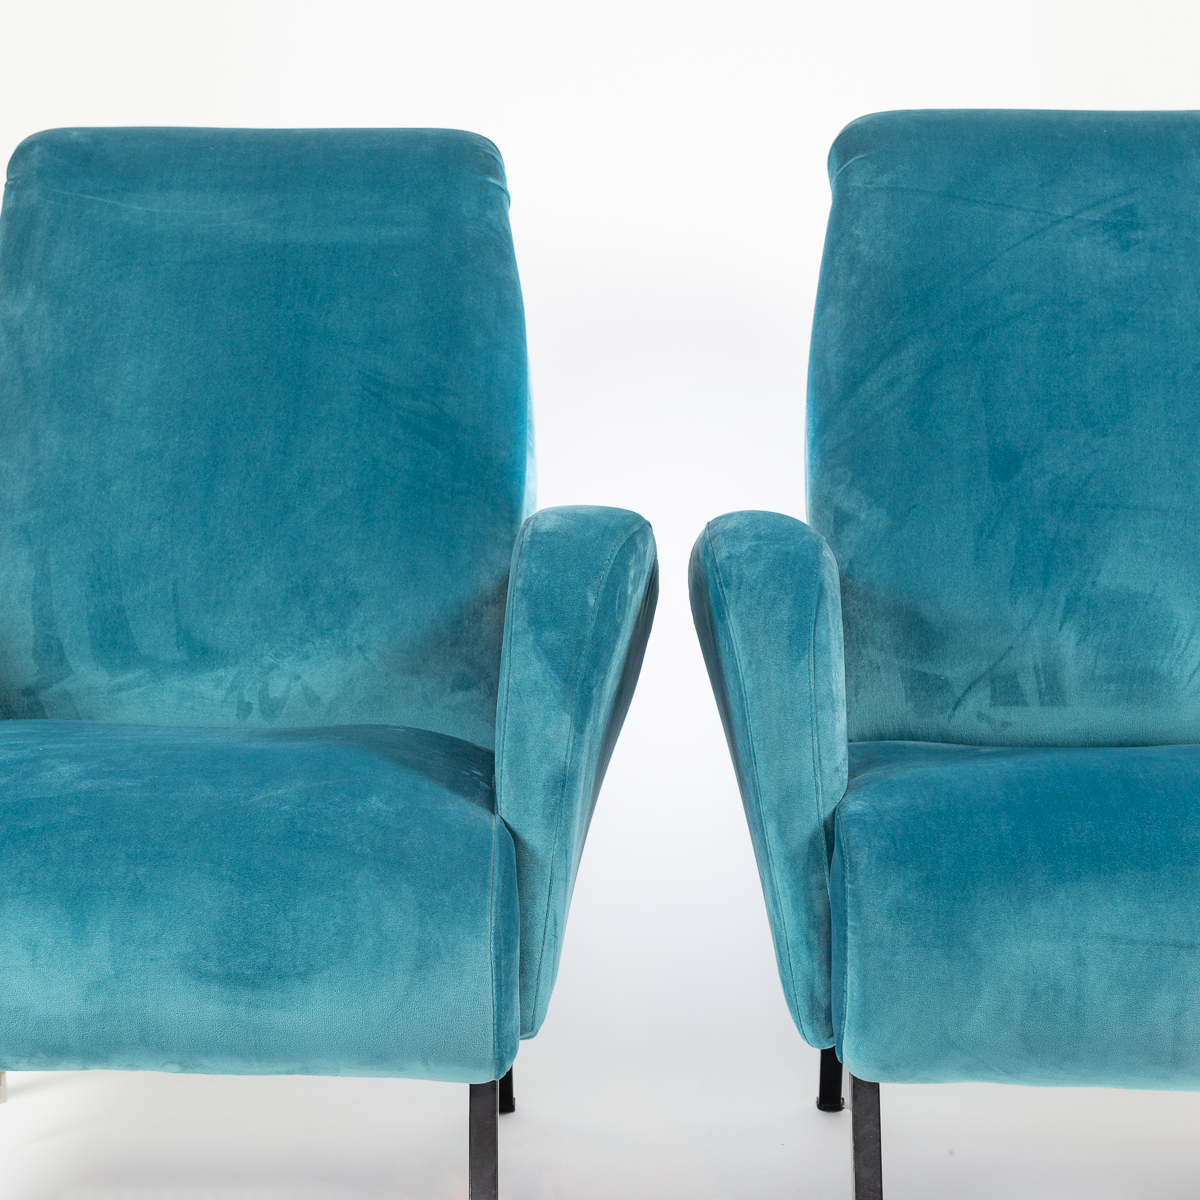 70's EYEtalian Teal Chairs - Pair